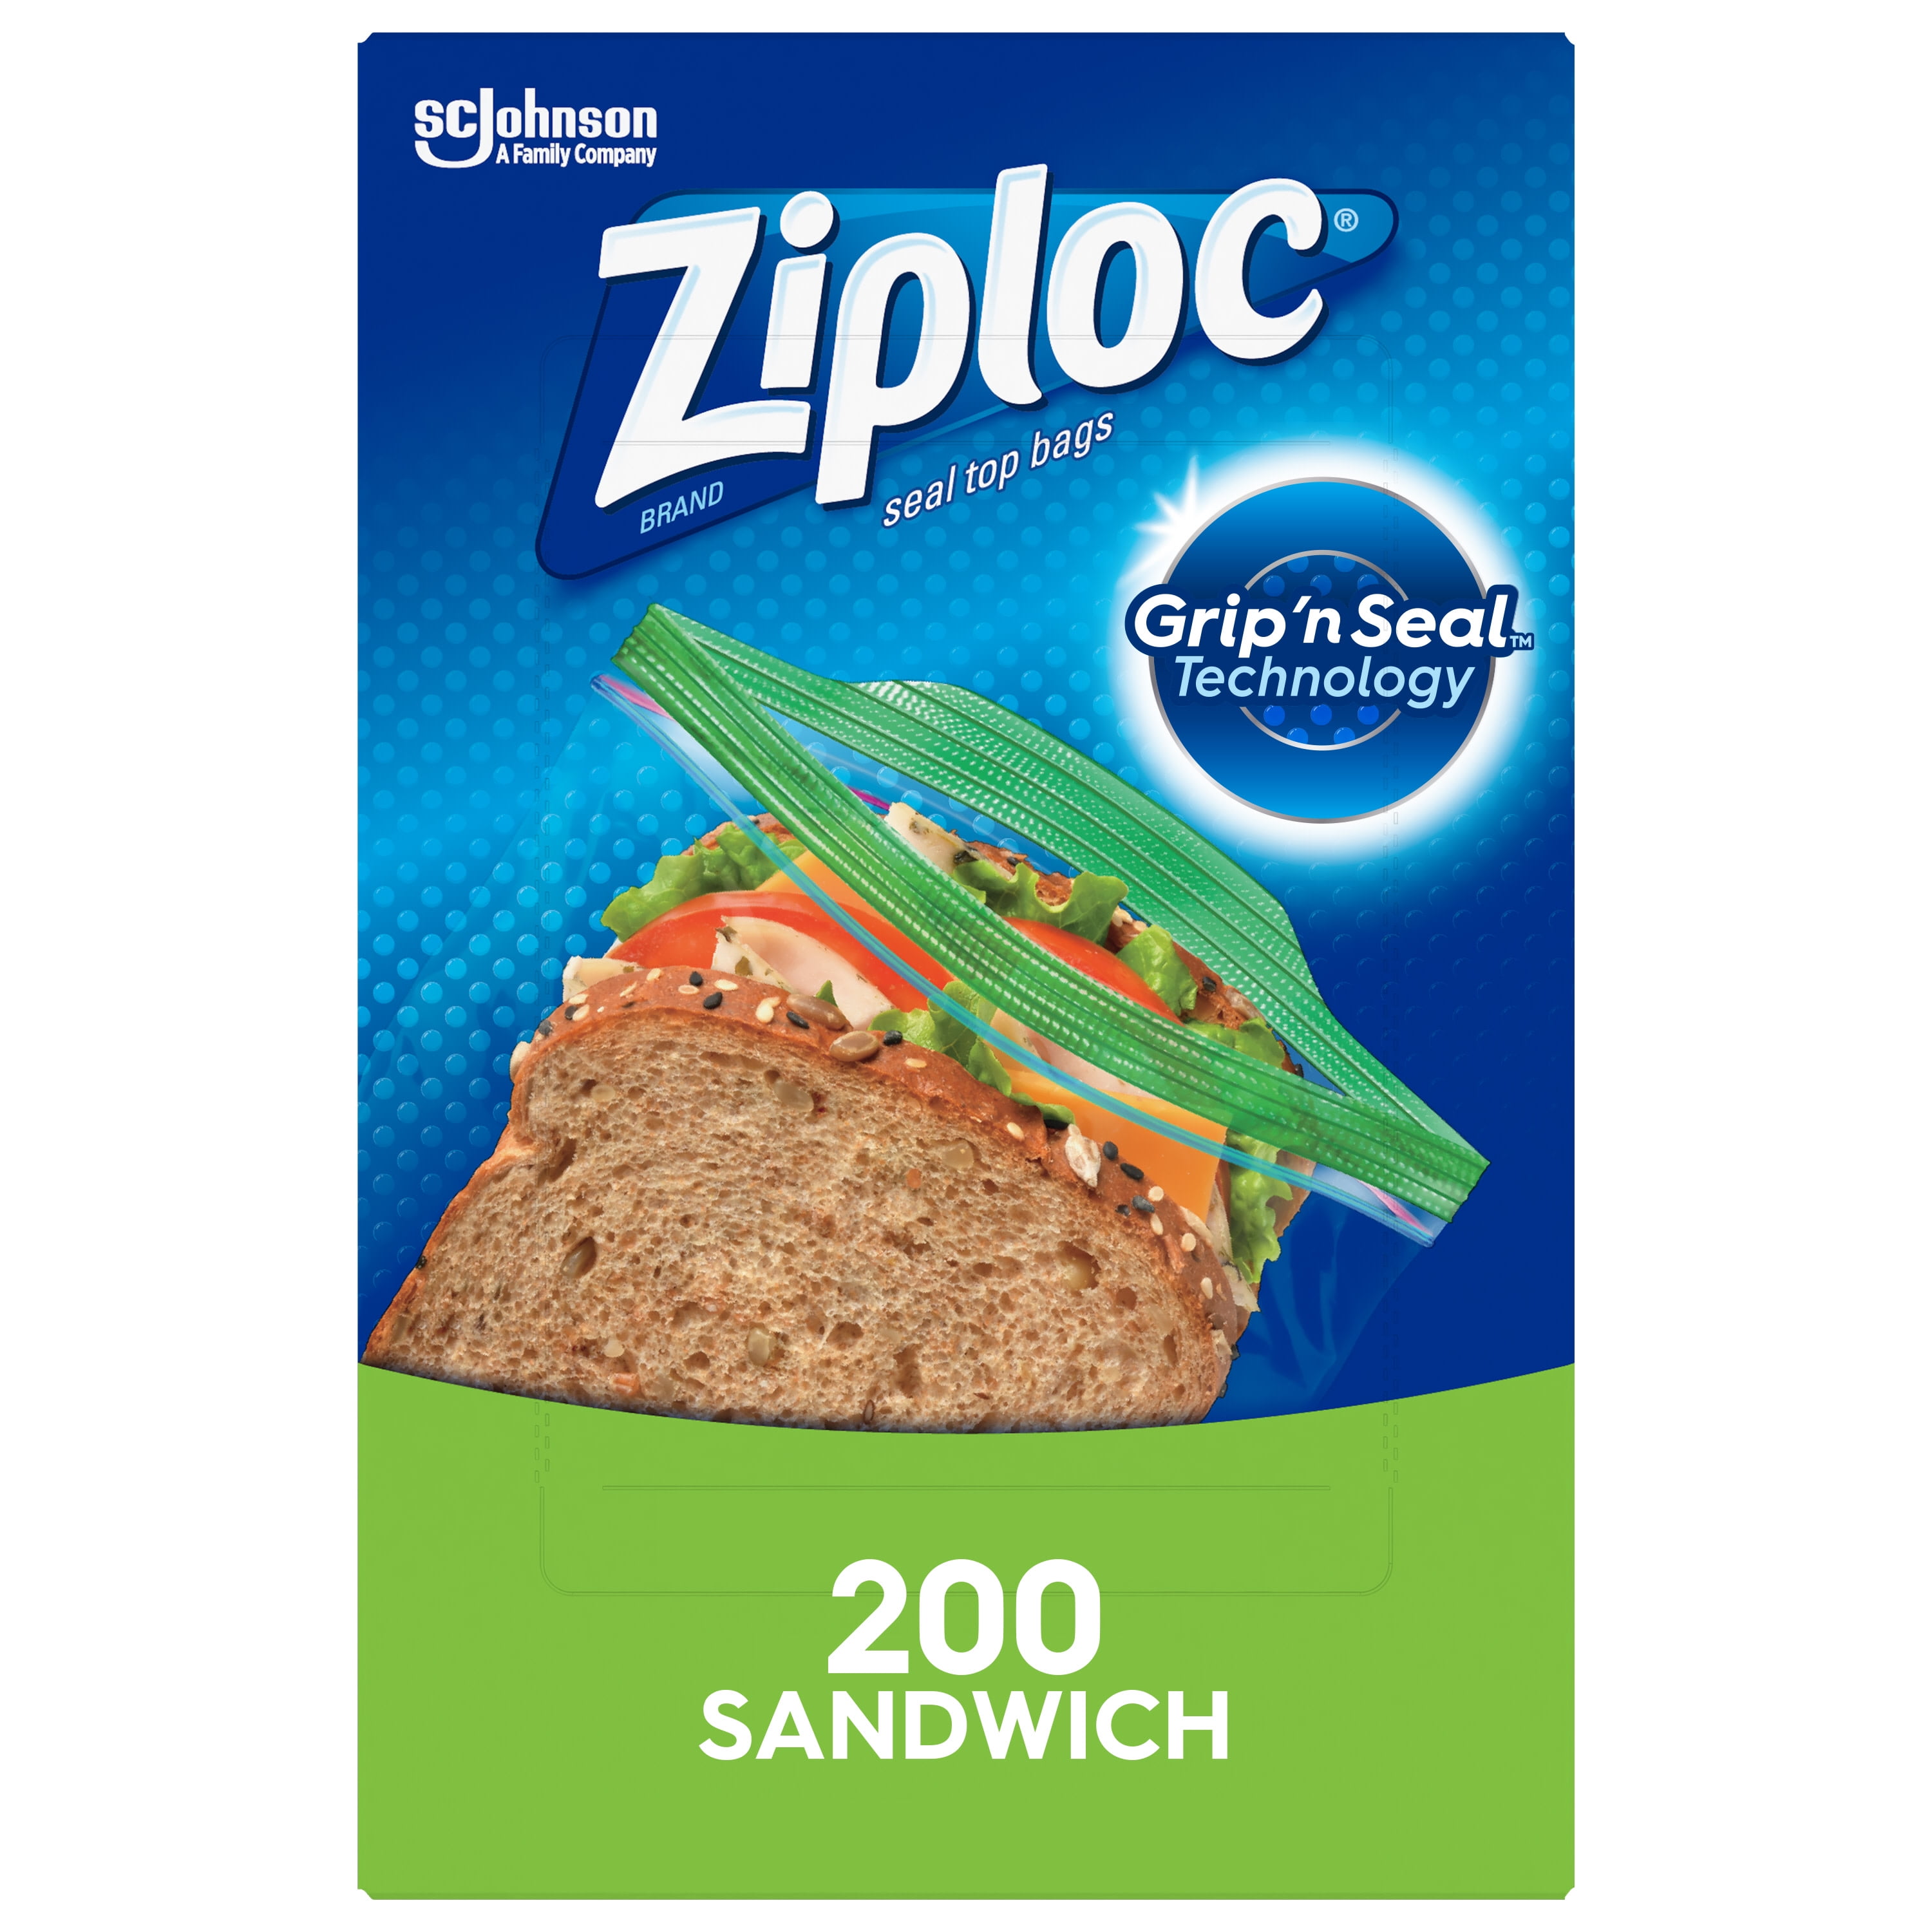 Ziploc Sandwich Bags(BOLSAS DE PLÁSTICO ZIPLOC SANDWICH)